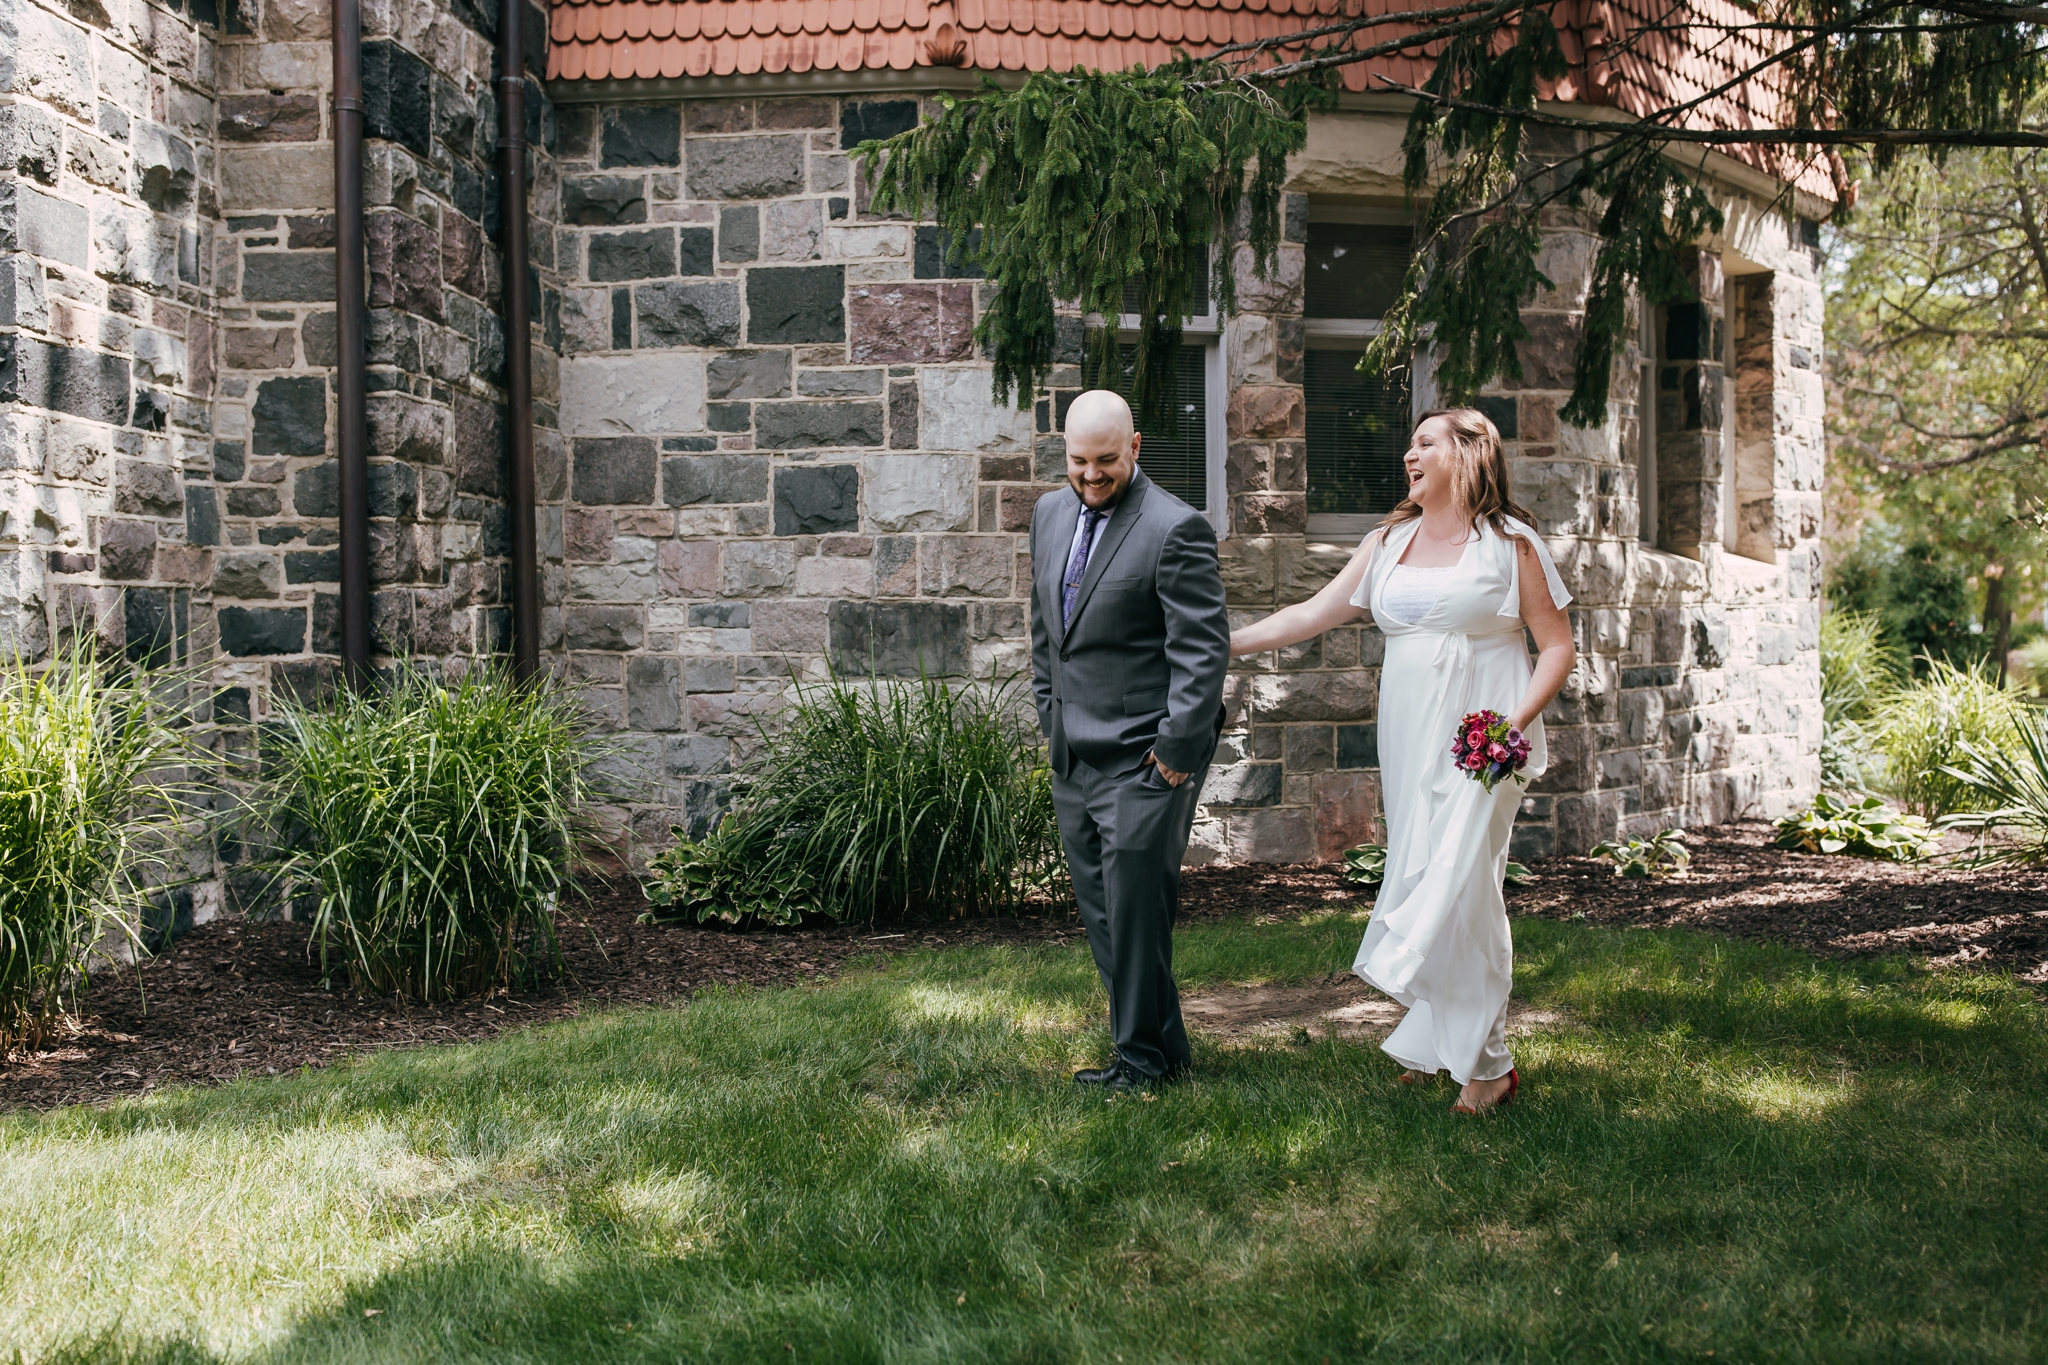 Erika and Steve | Eastern Michigan University Intimate Wedding | Ypsilanti, MI